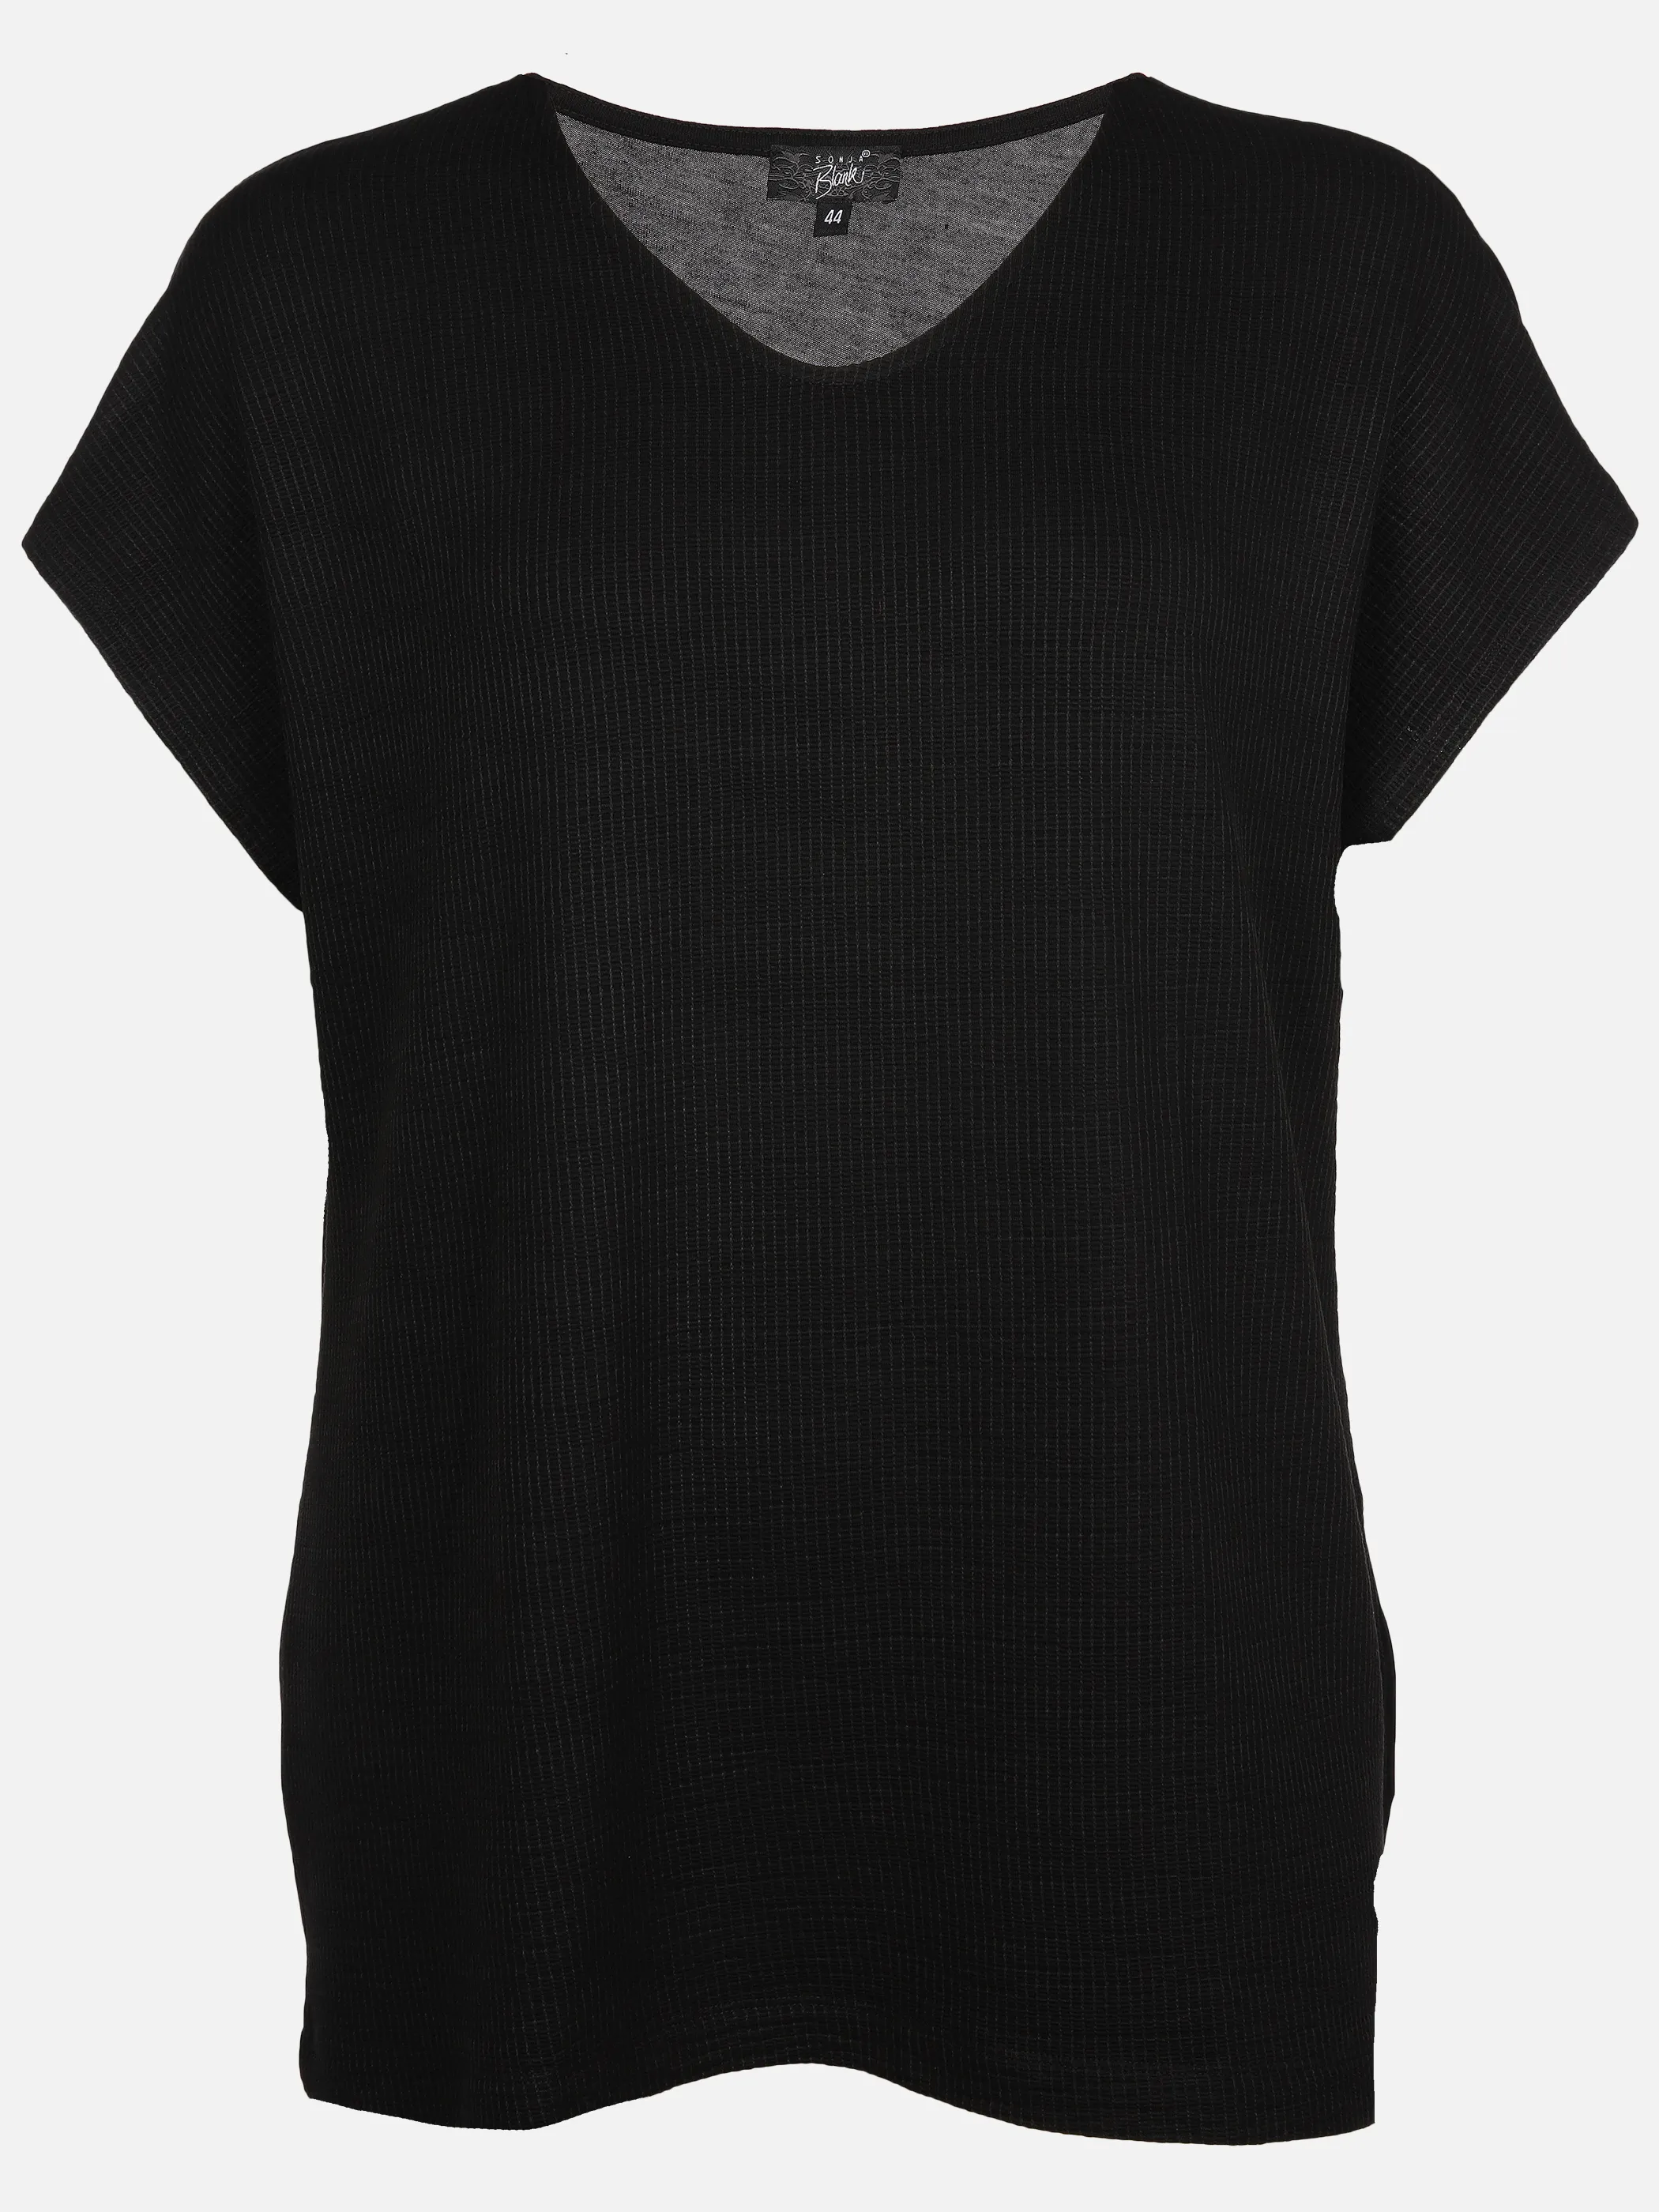 Sonja Blank Da-gr.Gr. T-Shirt V-Ausschnitt Schwarz 890338 BLACK 1